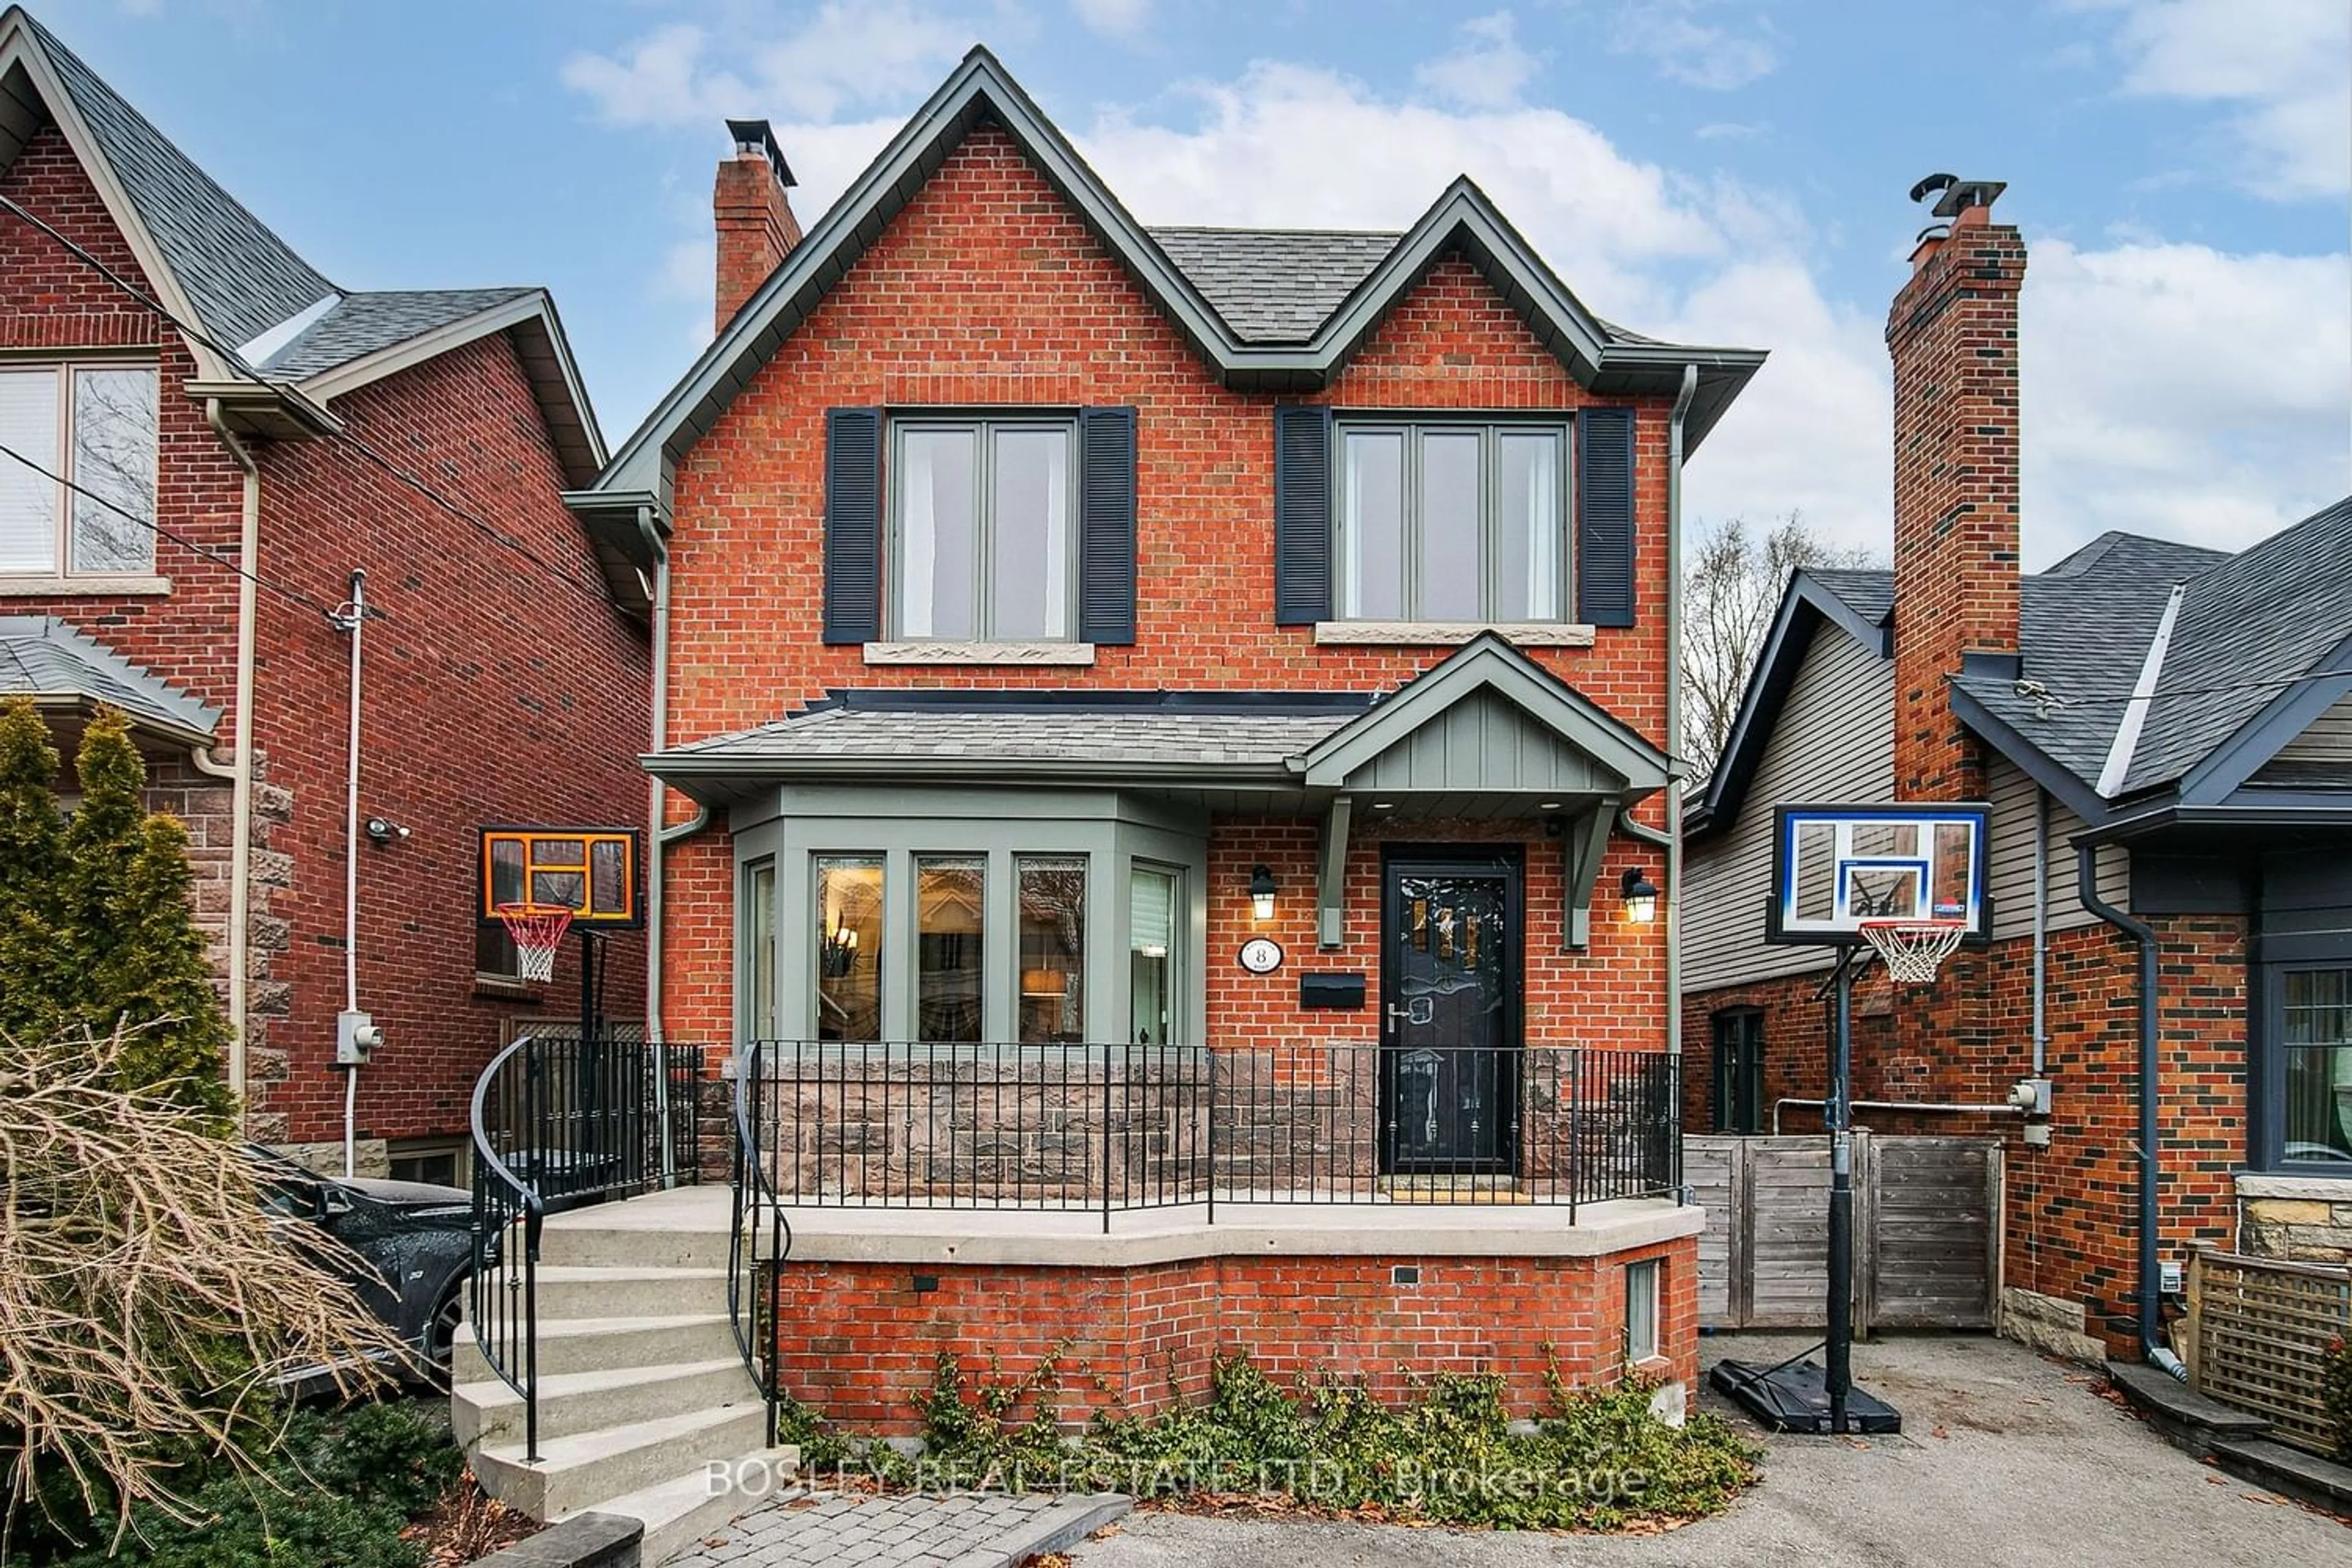 Home with brick exterior material for 8 Randolph Rd, Toronto Ontario M4G 3R7